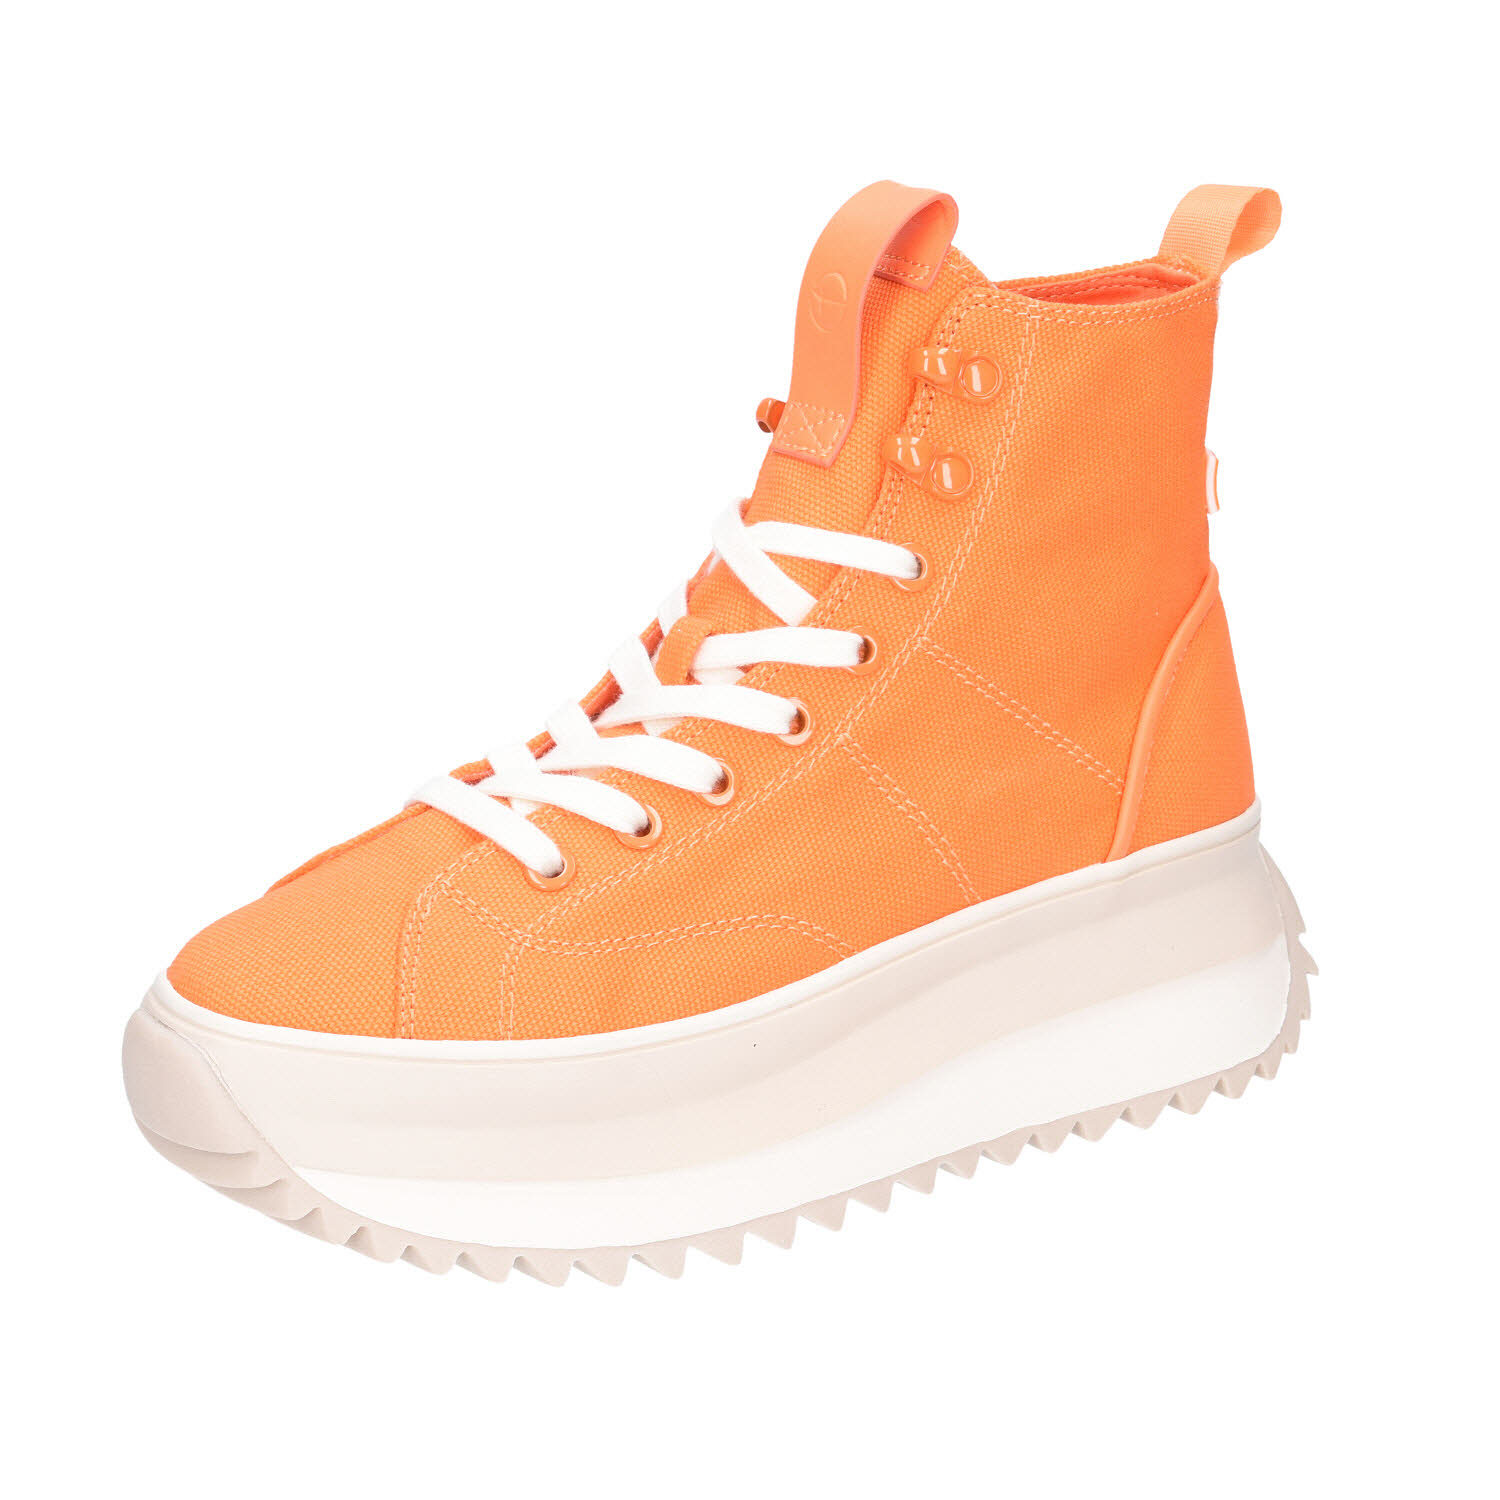 Tamaris Plateau Sneaker orange